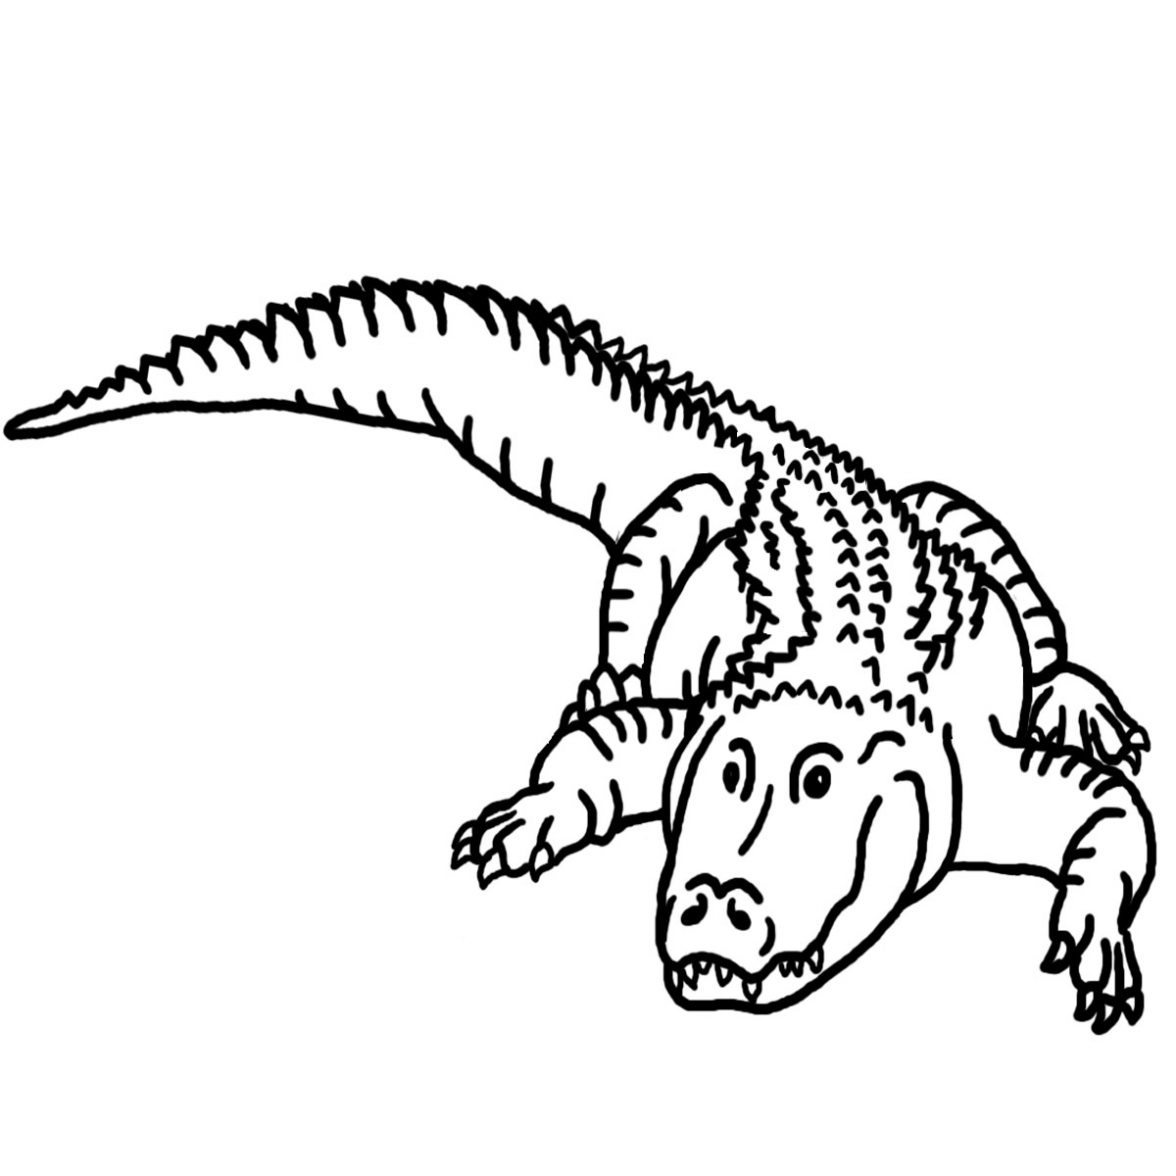 Coloriage Alligator #380 (Animaux) - Album De Coloriages dedans Coloriage Crocodile 